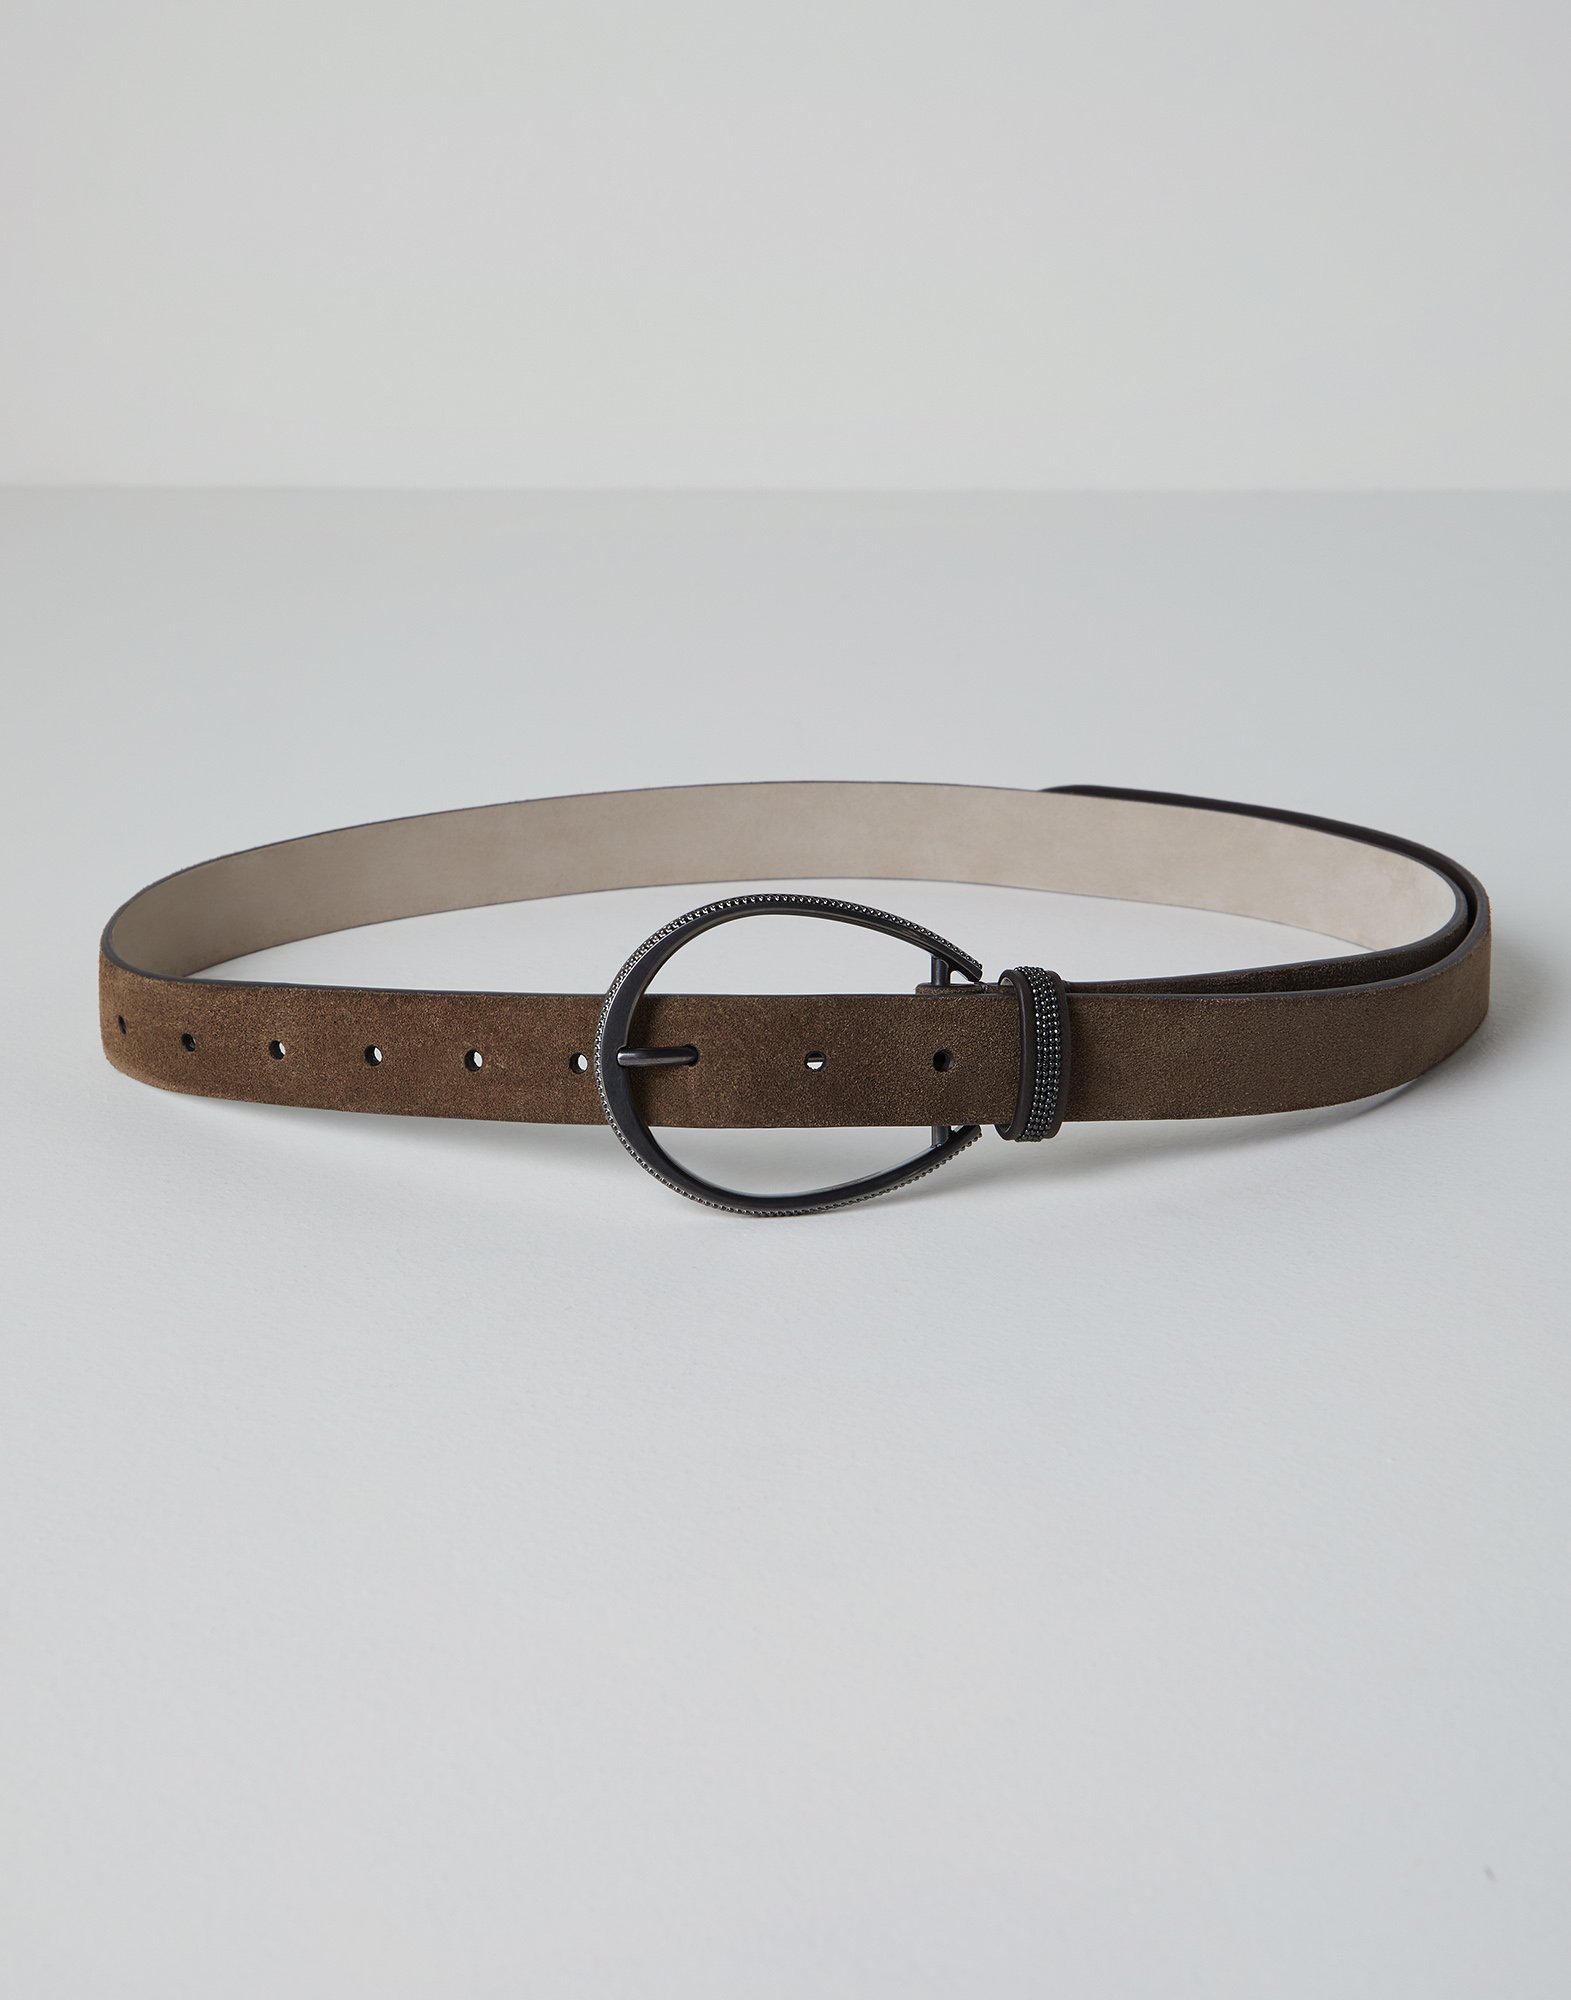 NWT $745 Brunello Cucinelli Pebbled Leather Skinny Bronze Western Belt Sz M A176 